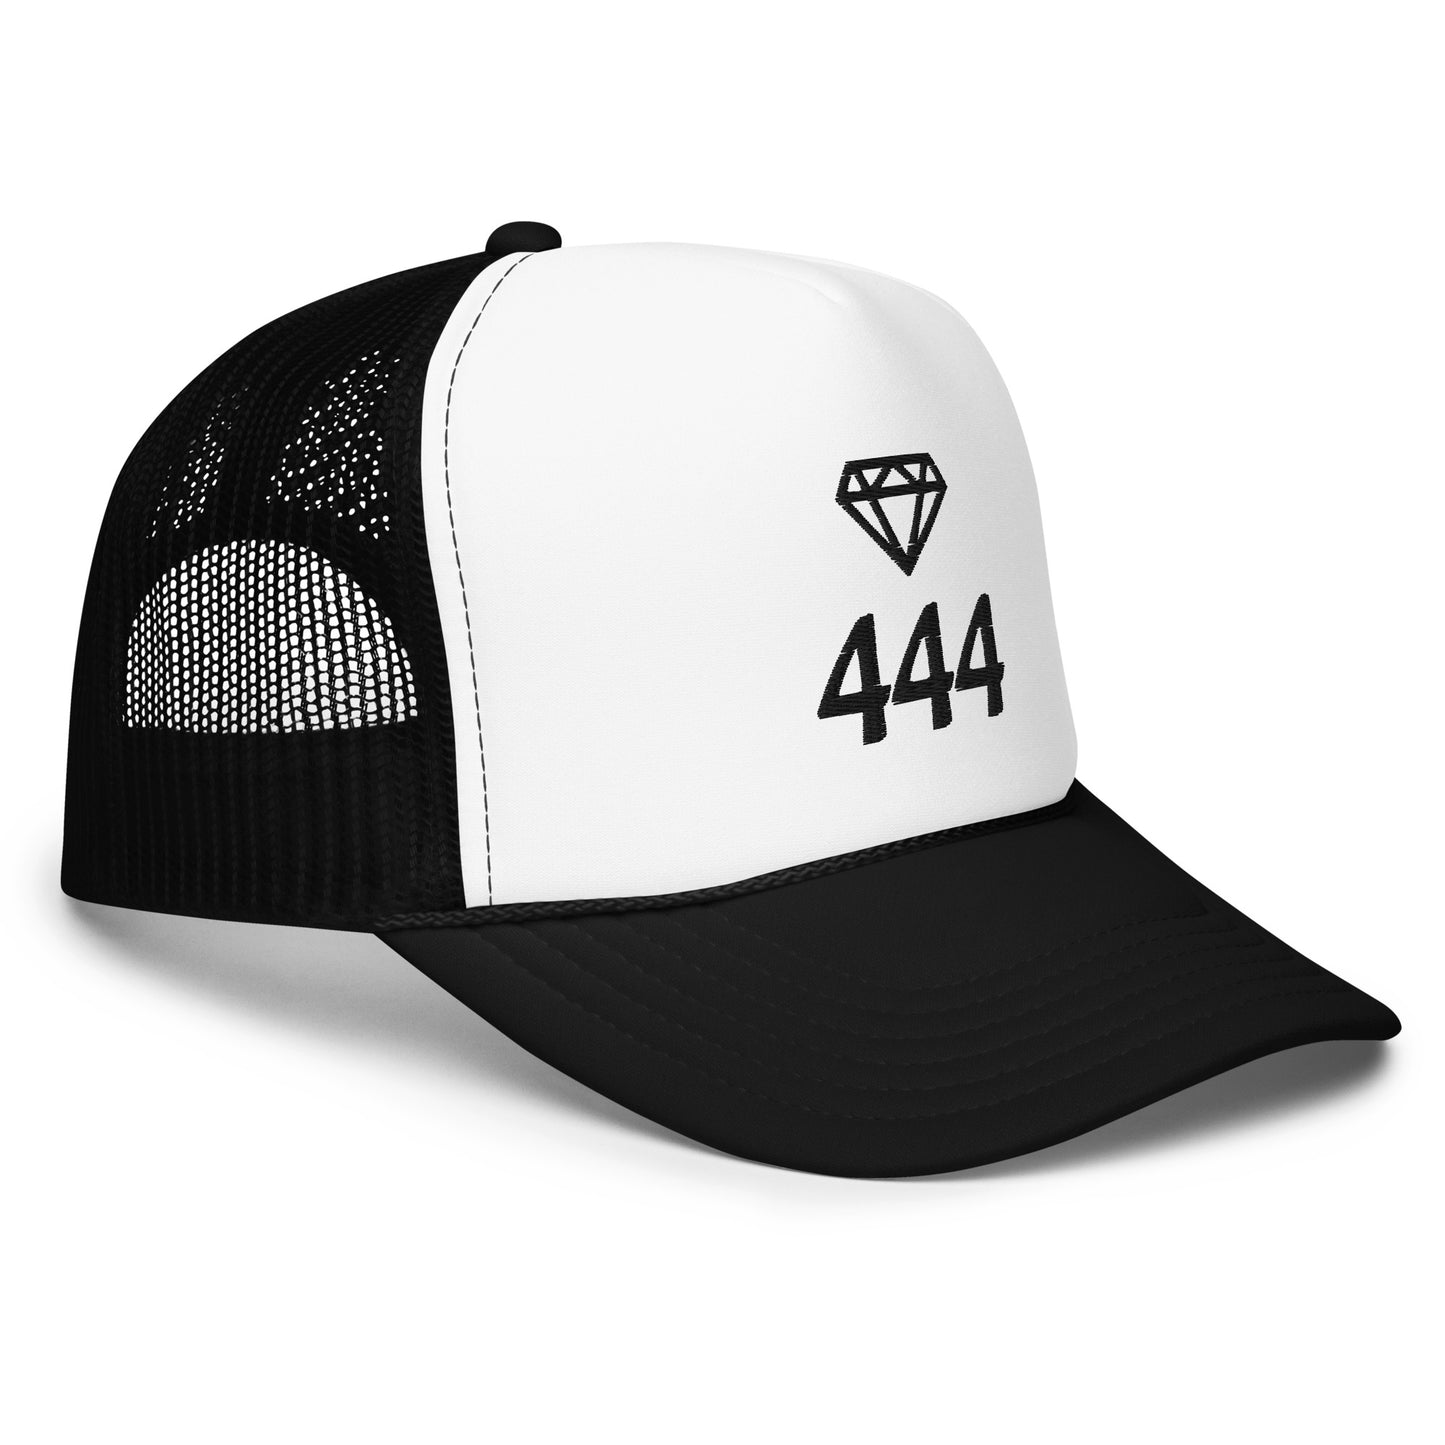 444 trucker hat